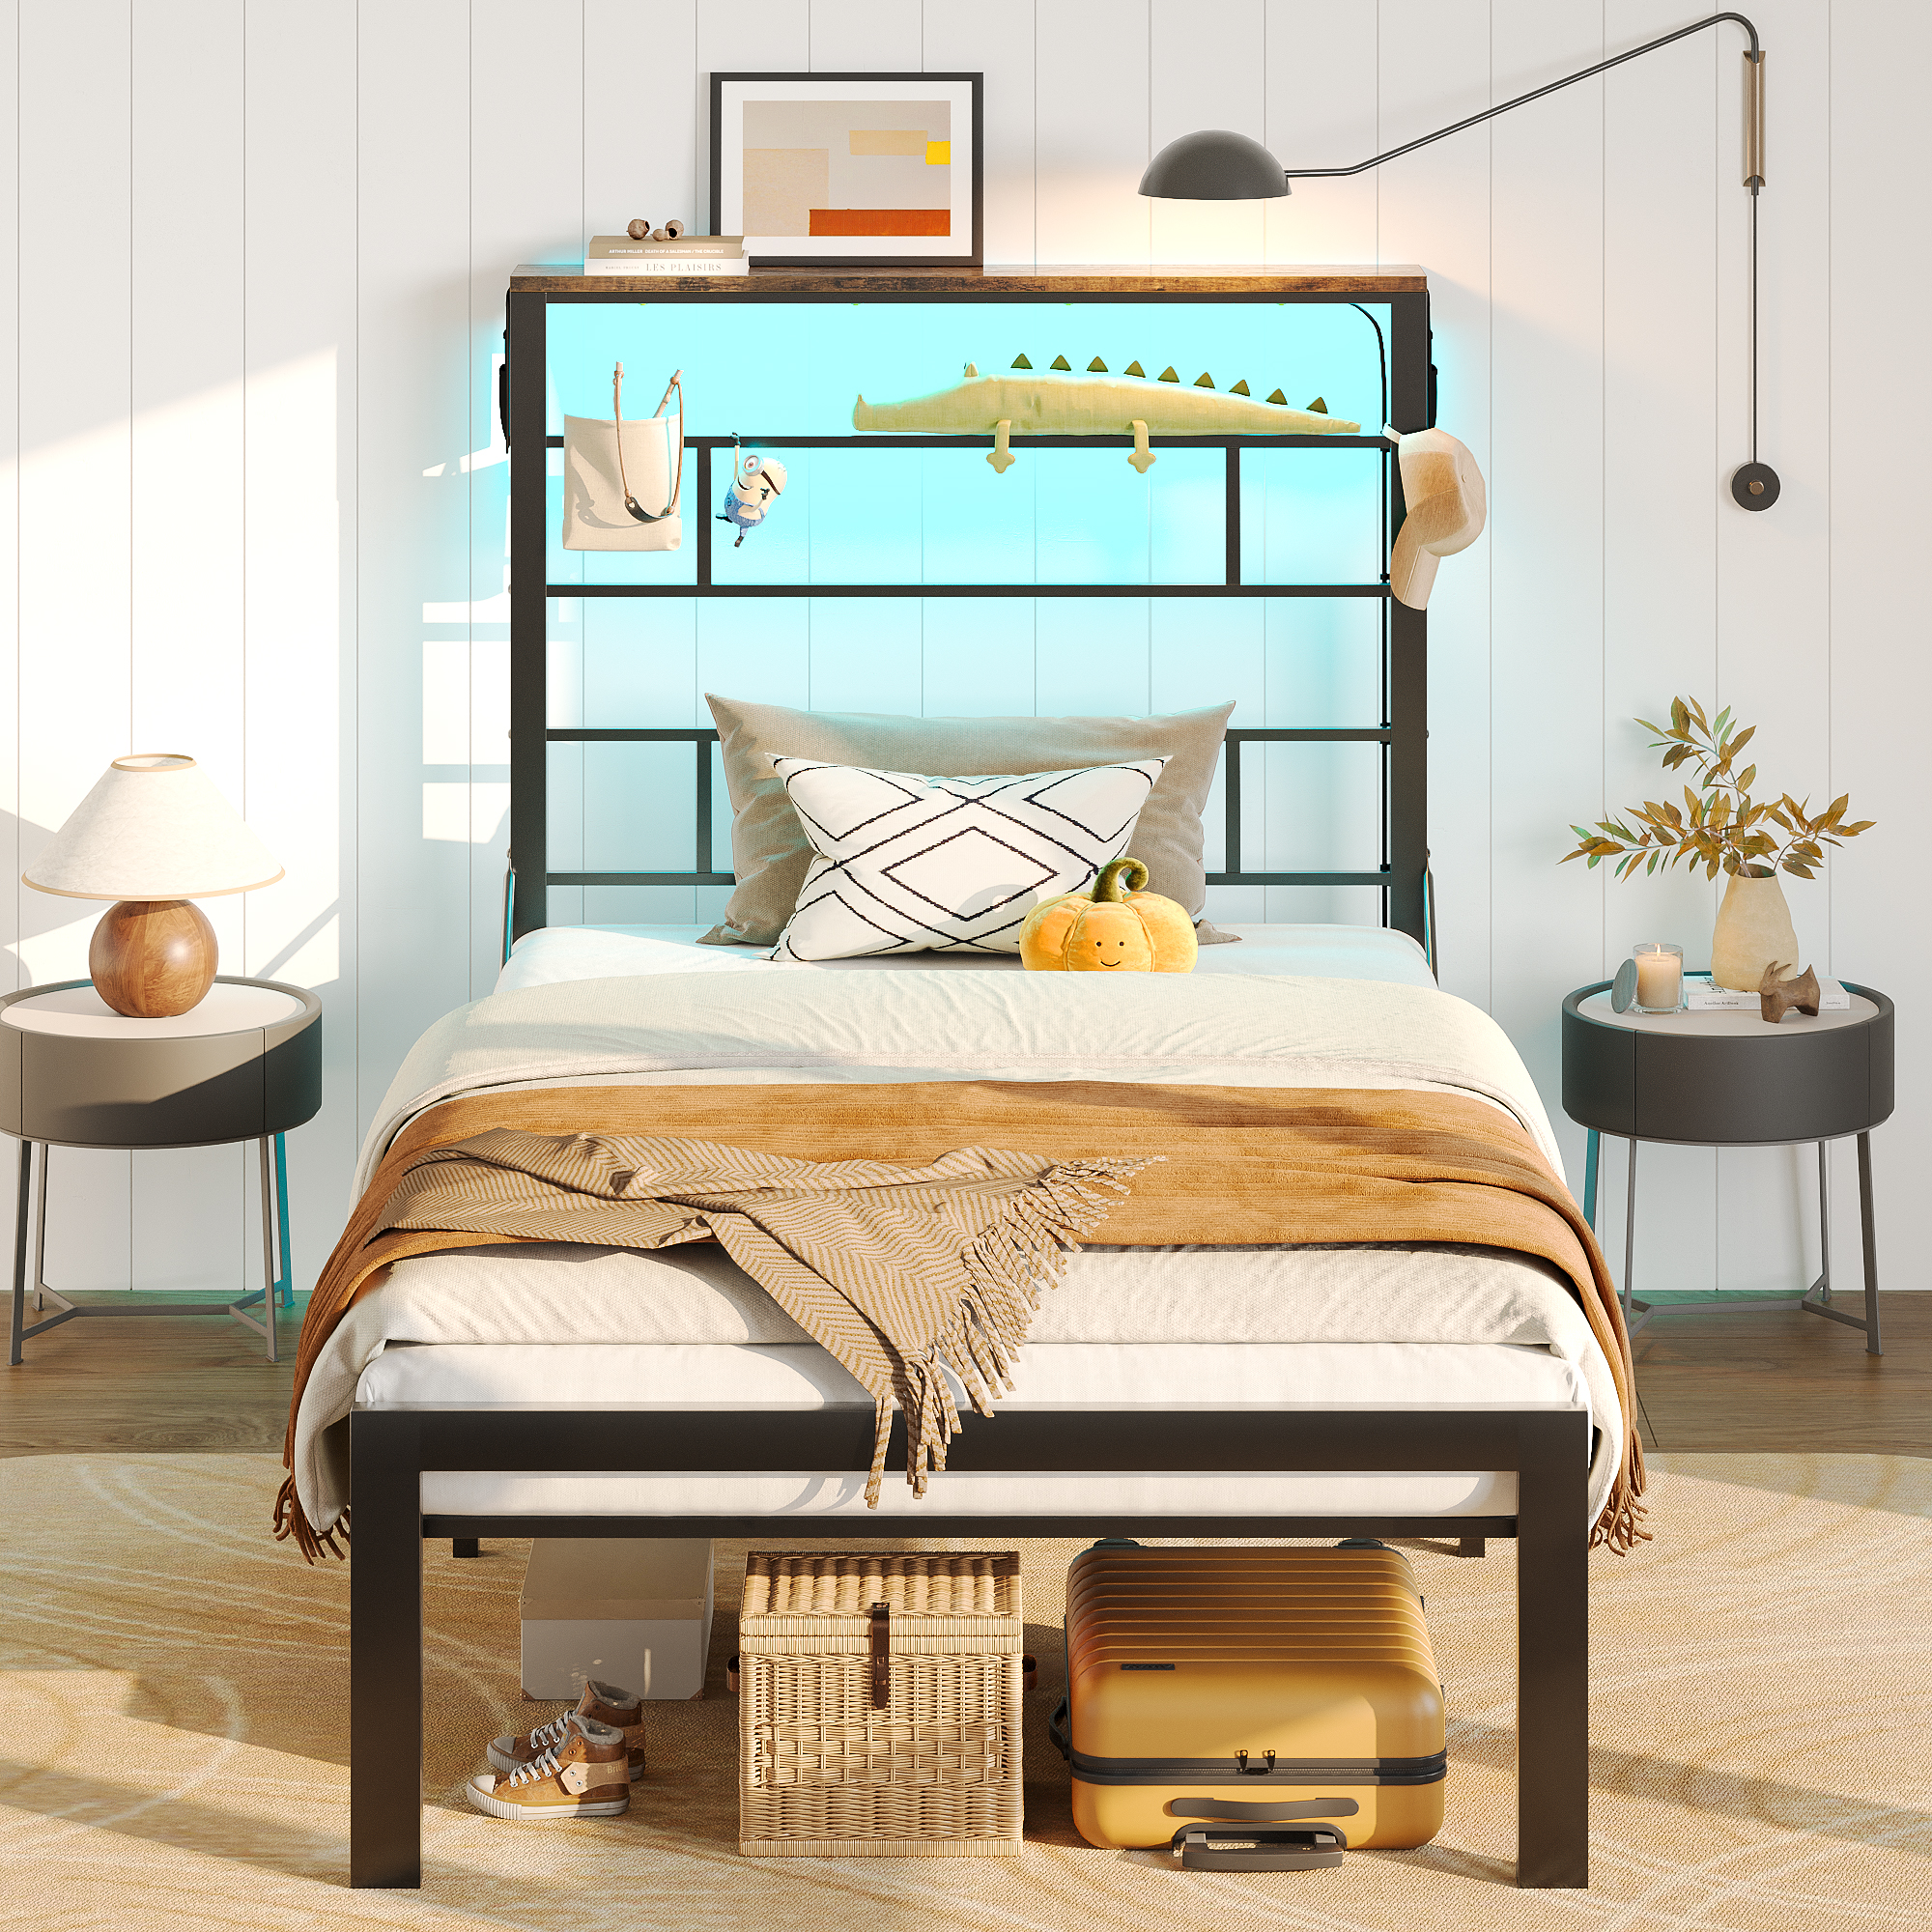 Bestier Twin Size Bed Frame with 49.2" High LED Storage Headboard Shelf, Metal Platform Bed, Black - image 1 of 9